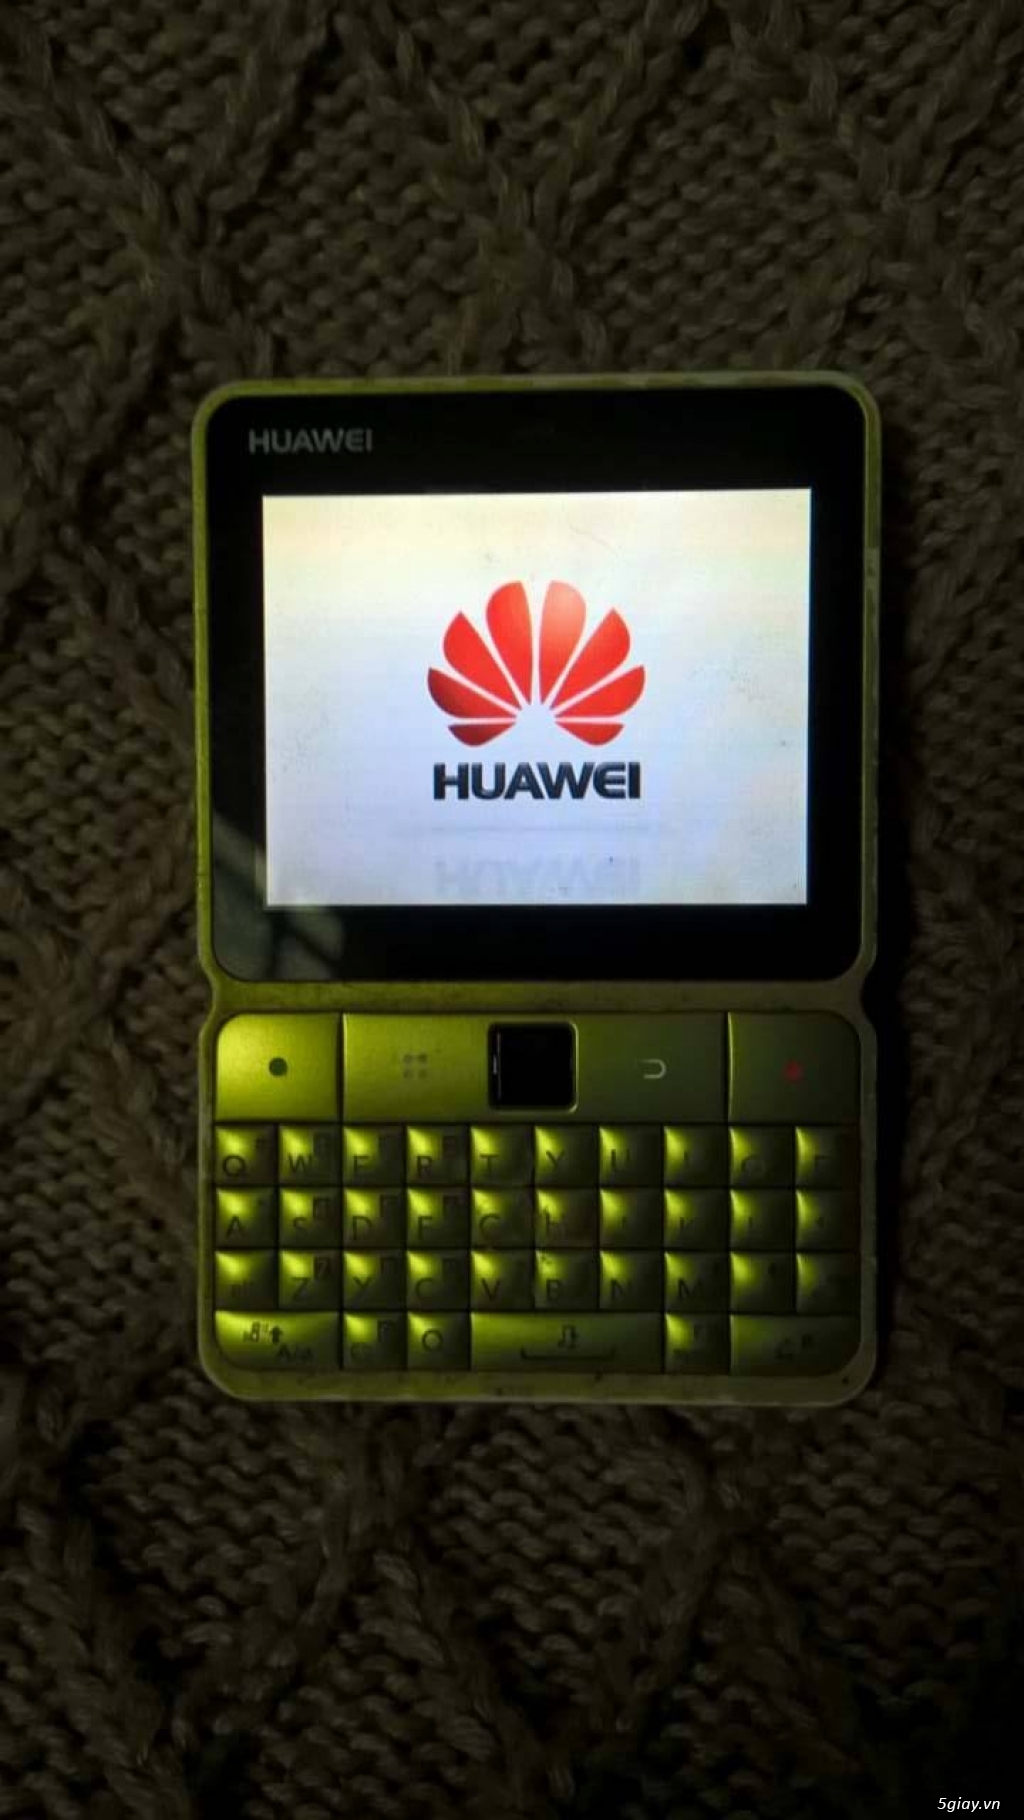 Nokia e63, n2630, nokia x2-01, n6233, n6120c, huawei g6680 - 21